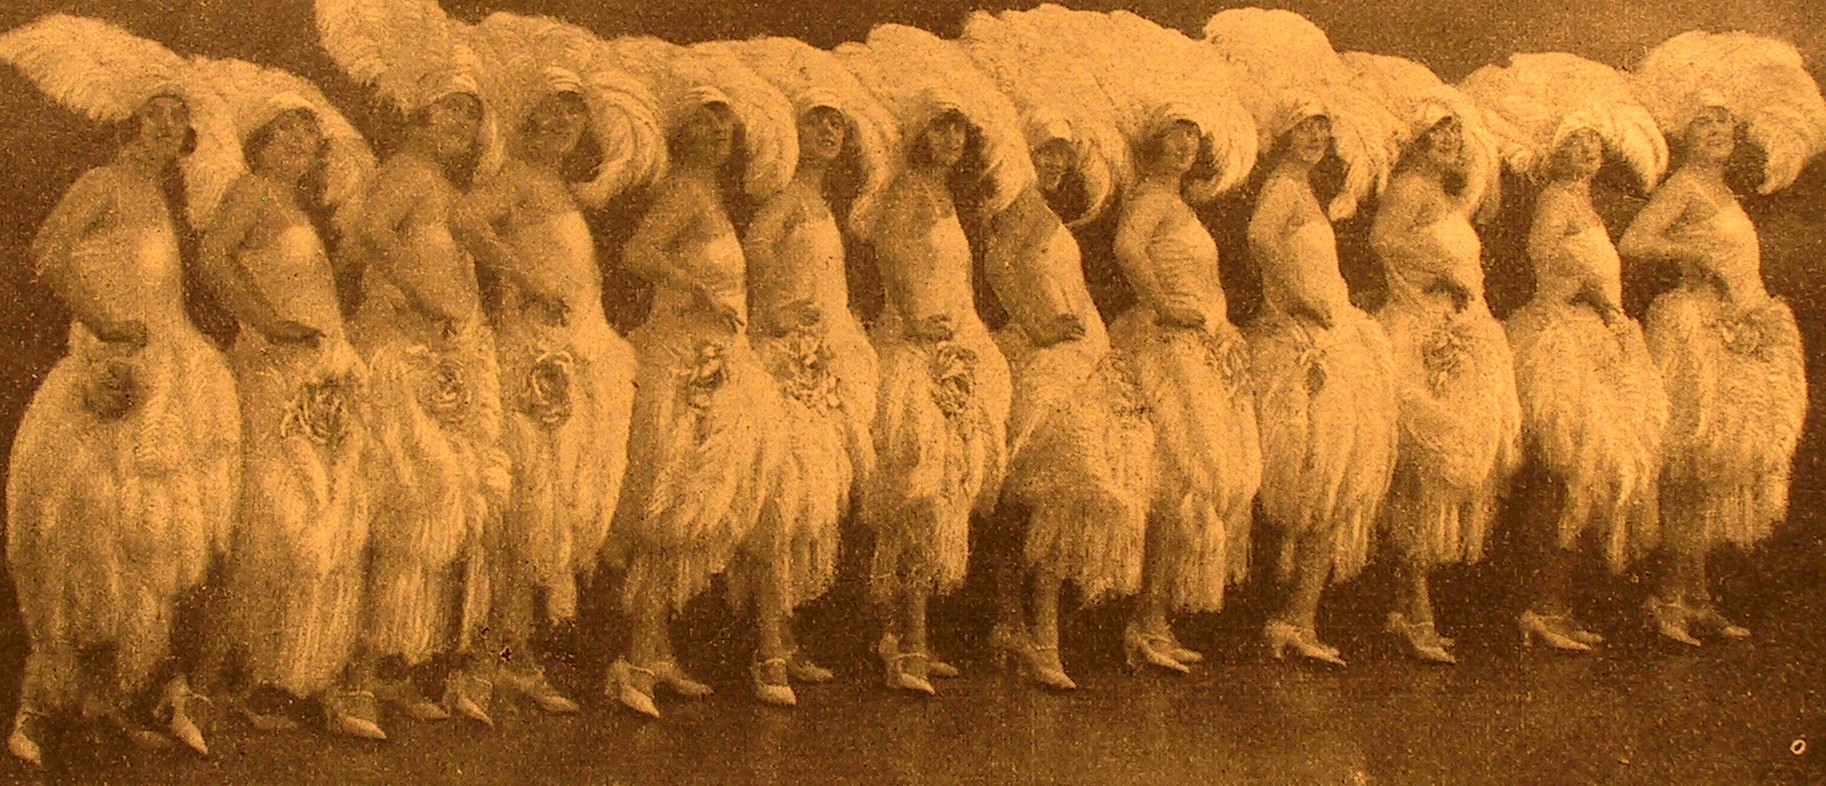 The "Mariza" girls in the 1924 Berlin production. (Photo: Operetta Research Center)